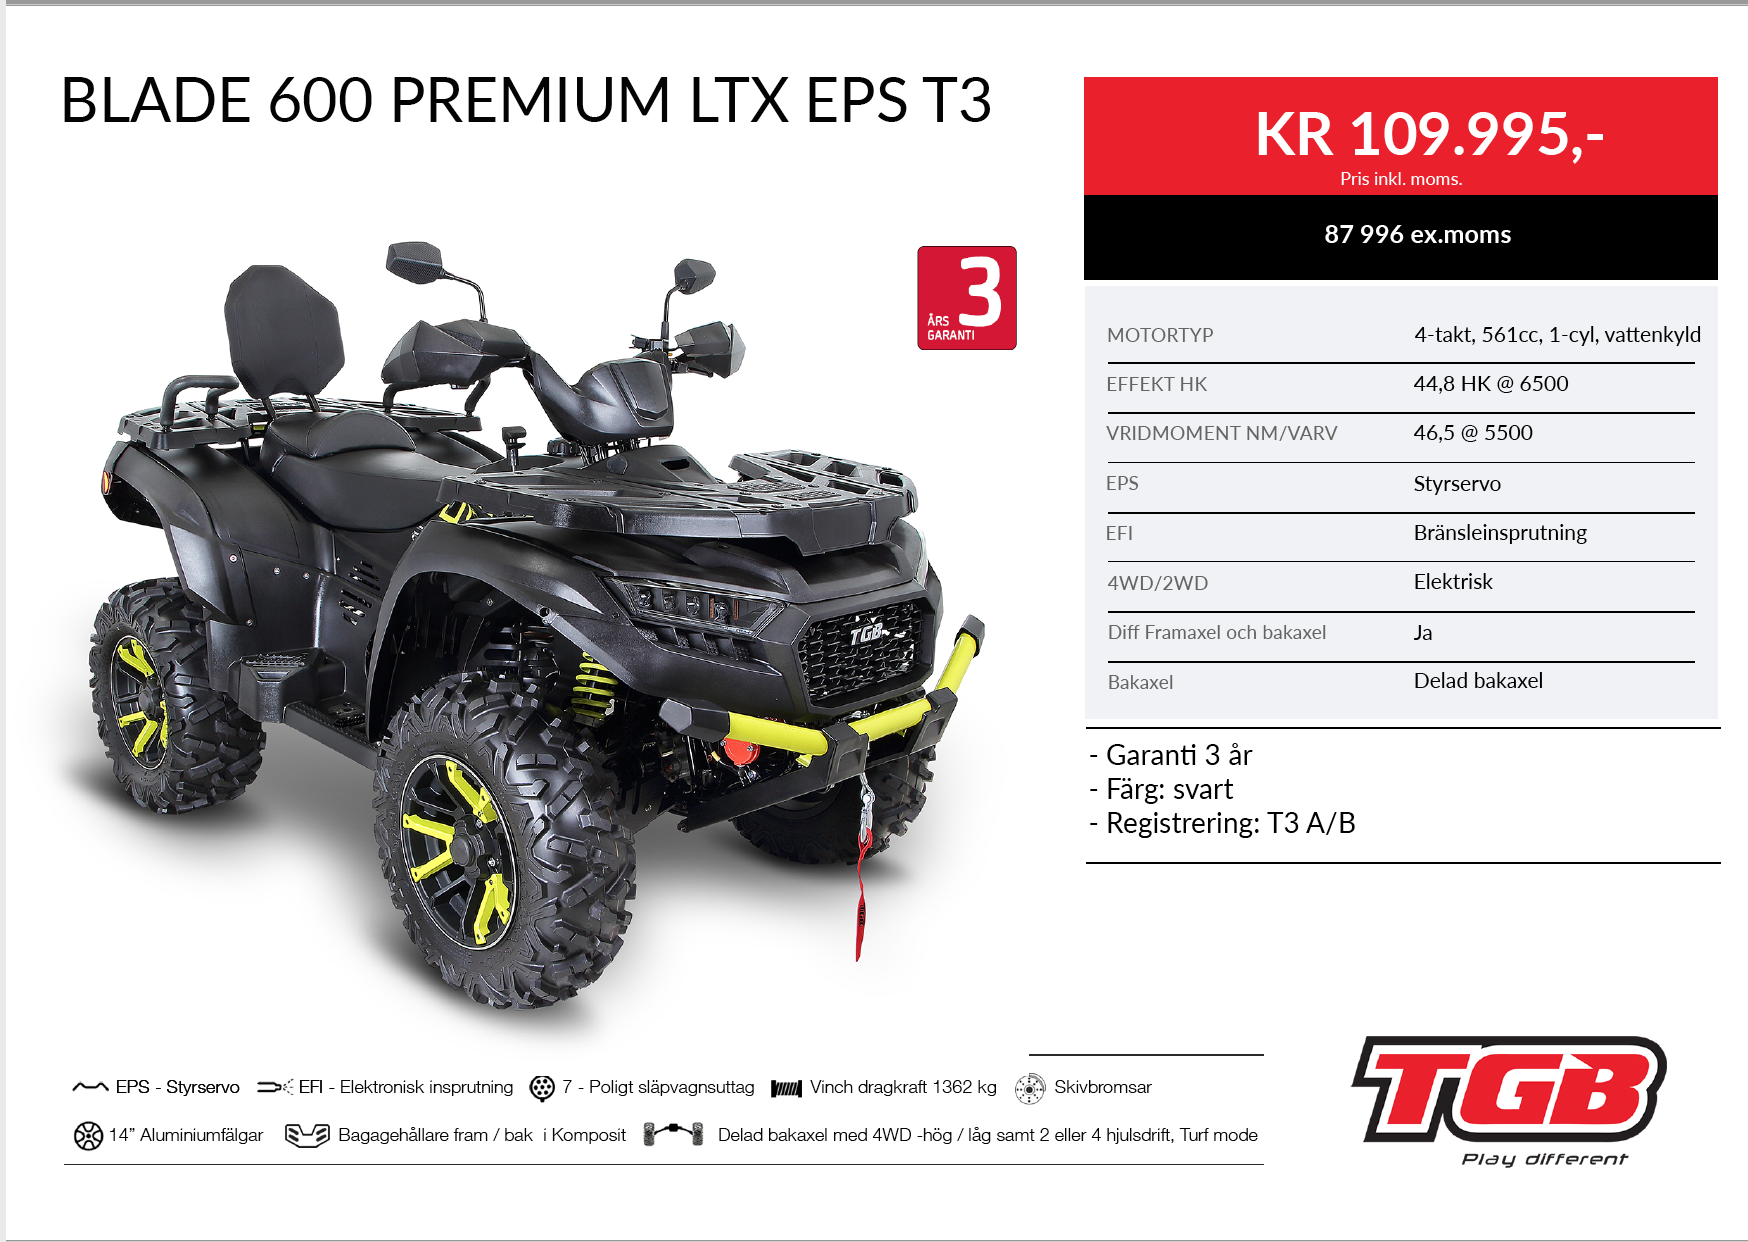 Blade 600 Premium LTX EPS T3